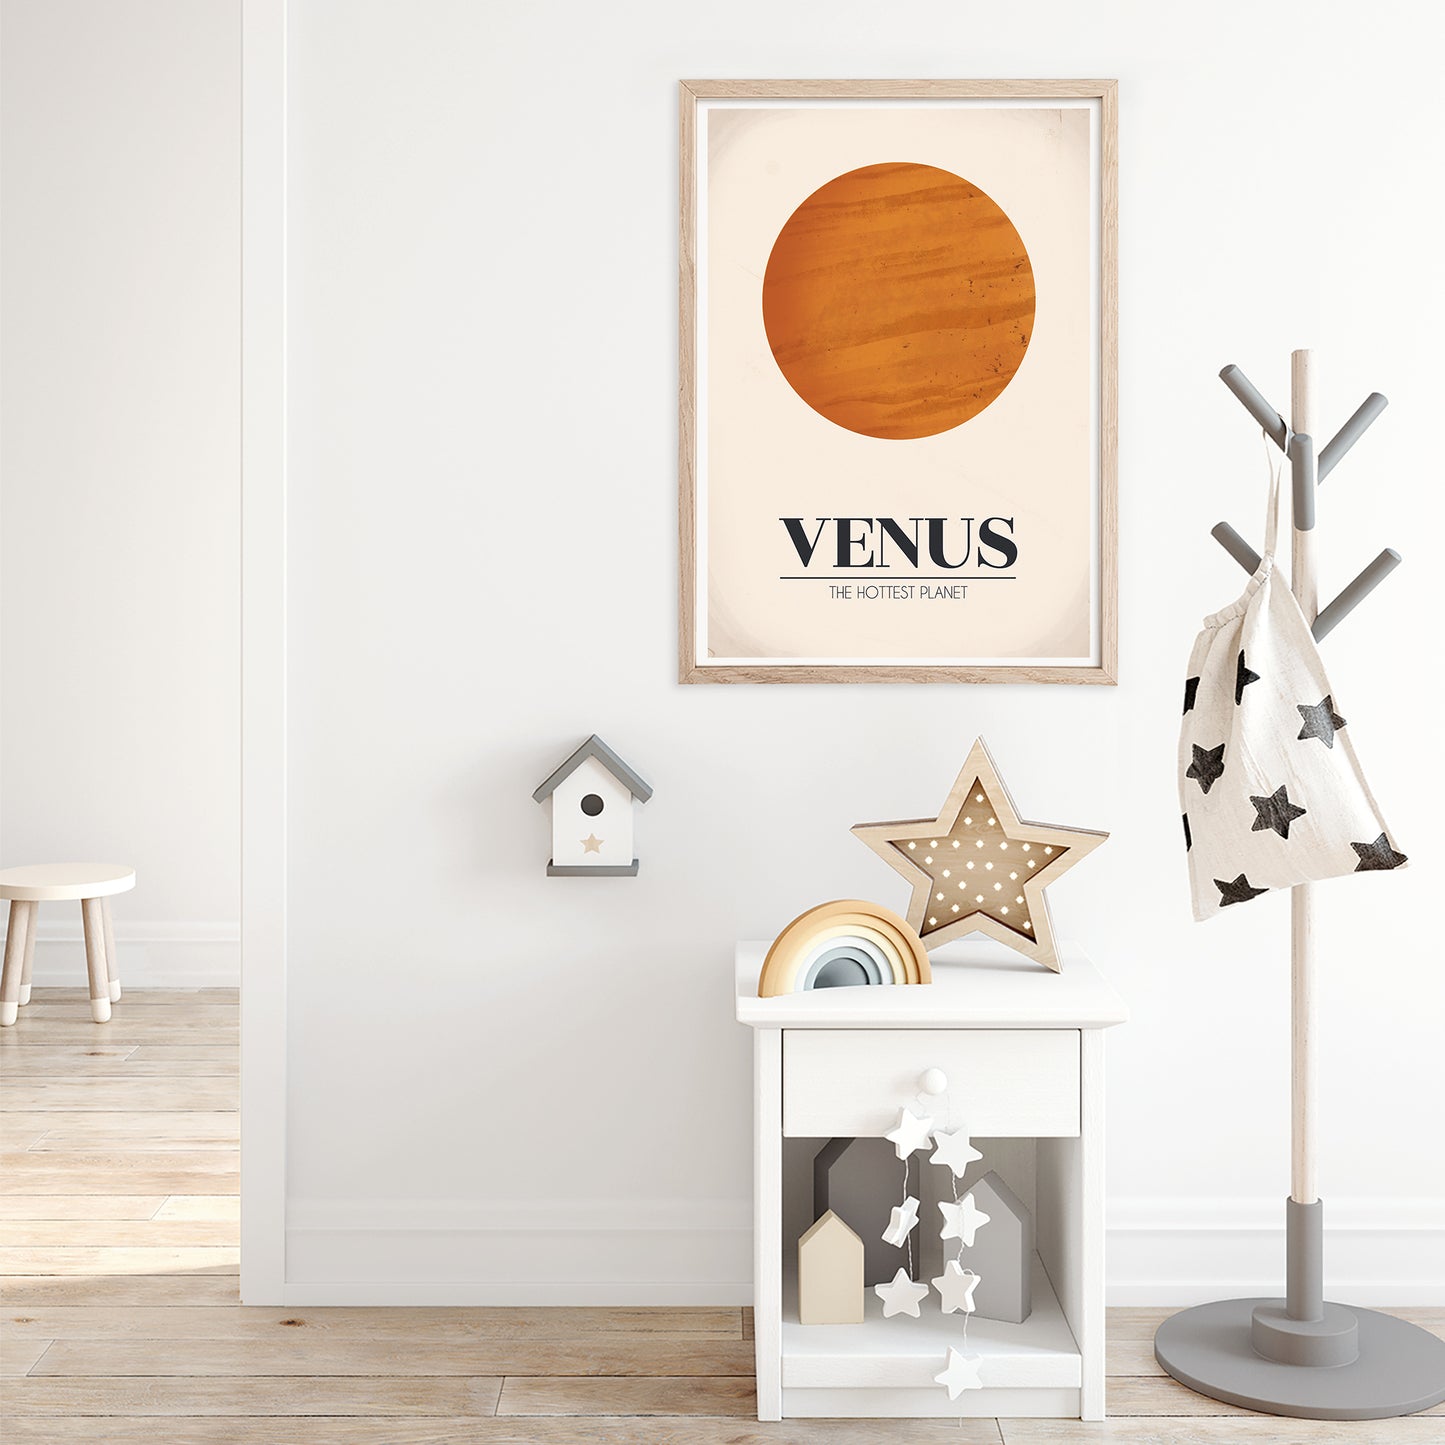 Planets of the solar system print - Venus